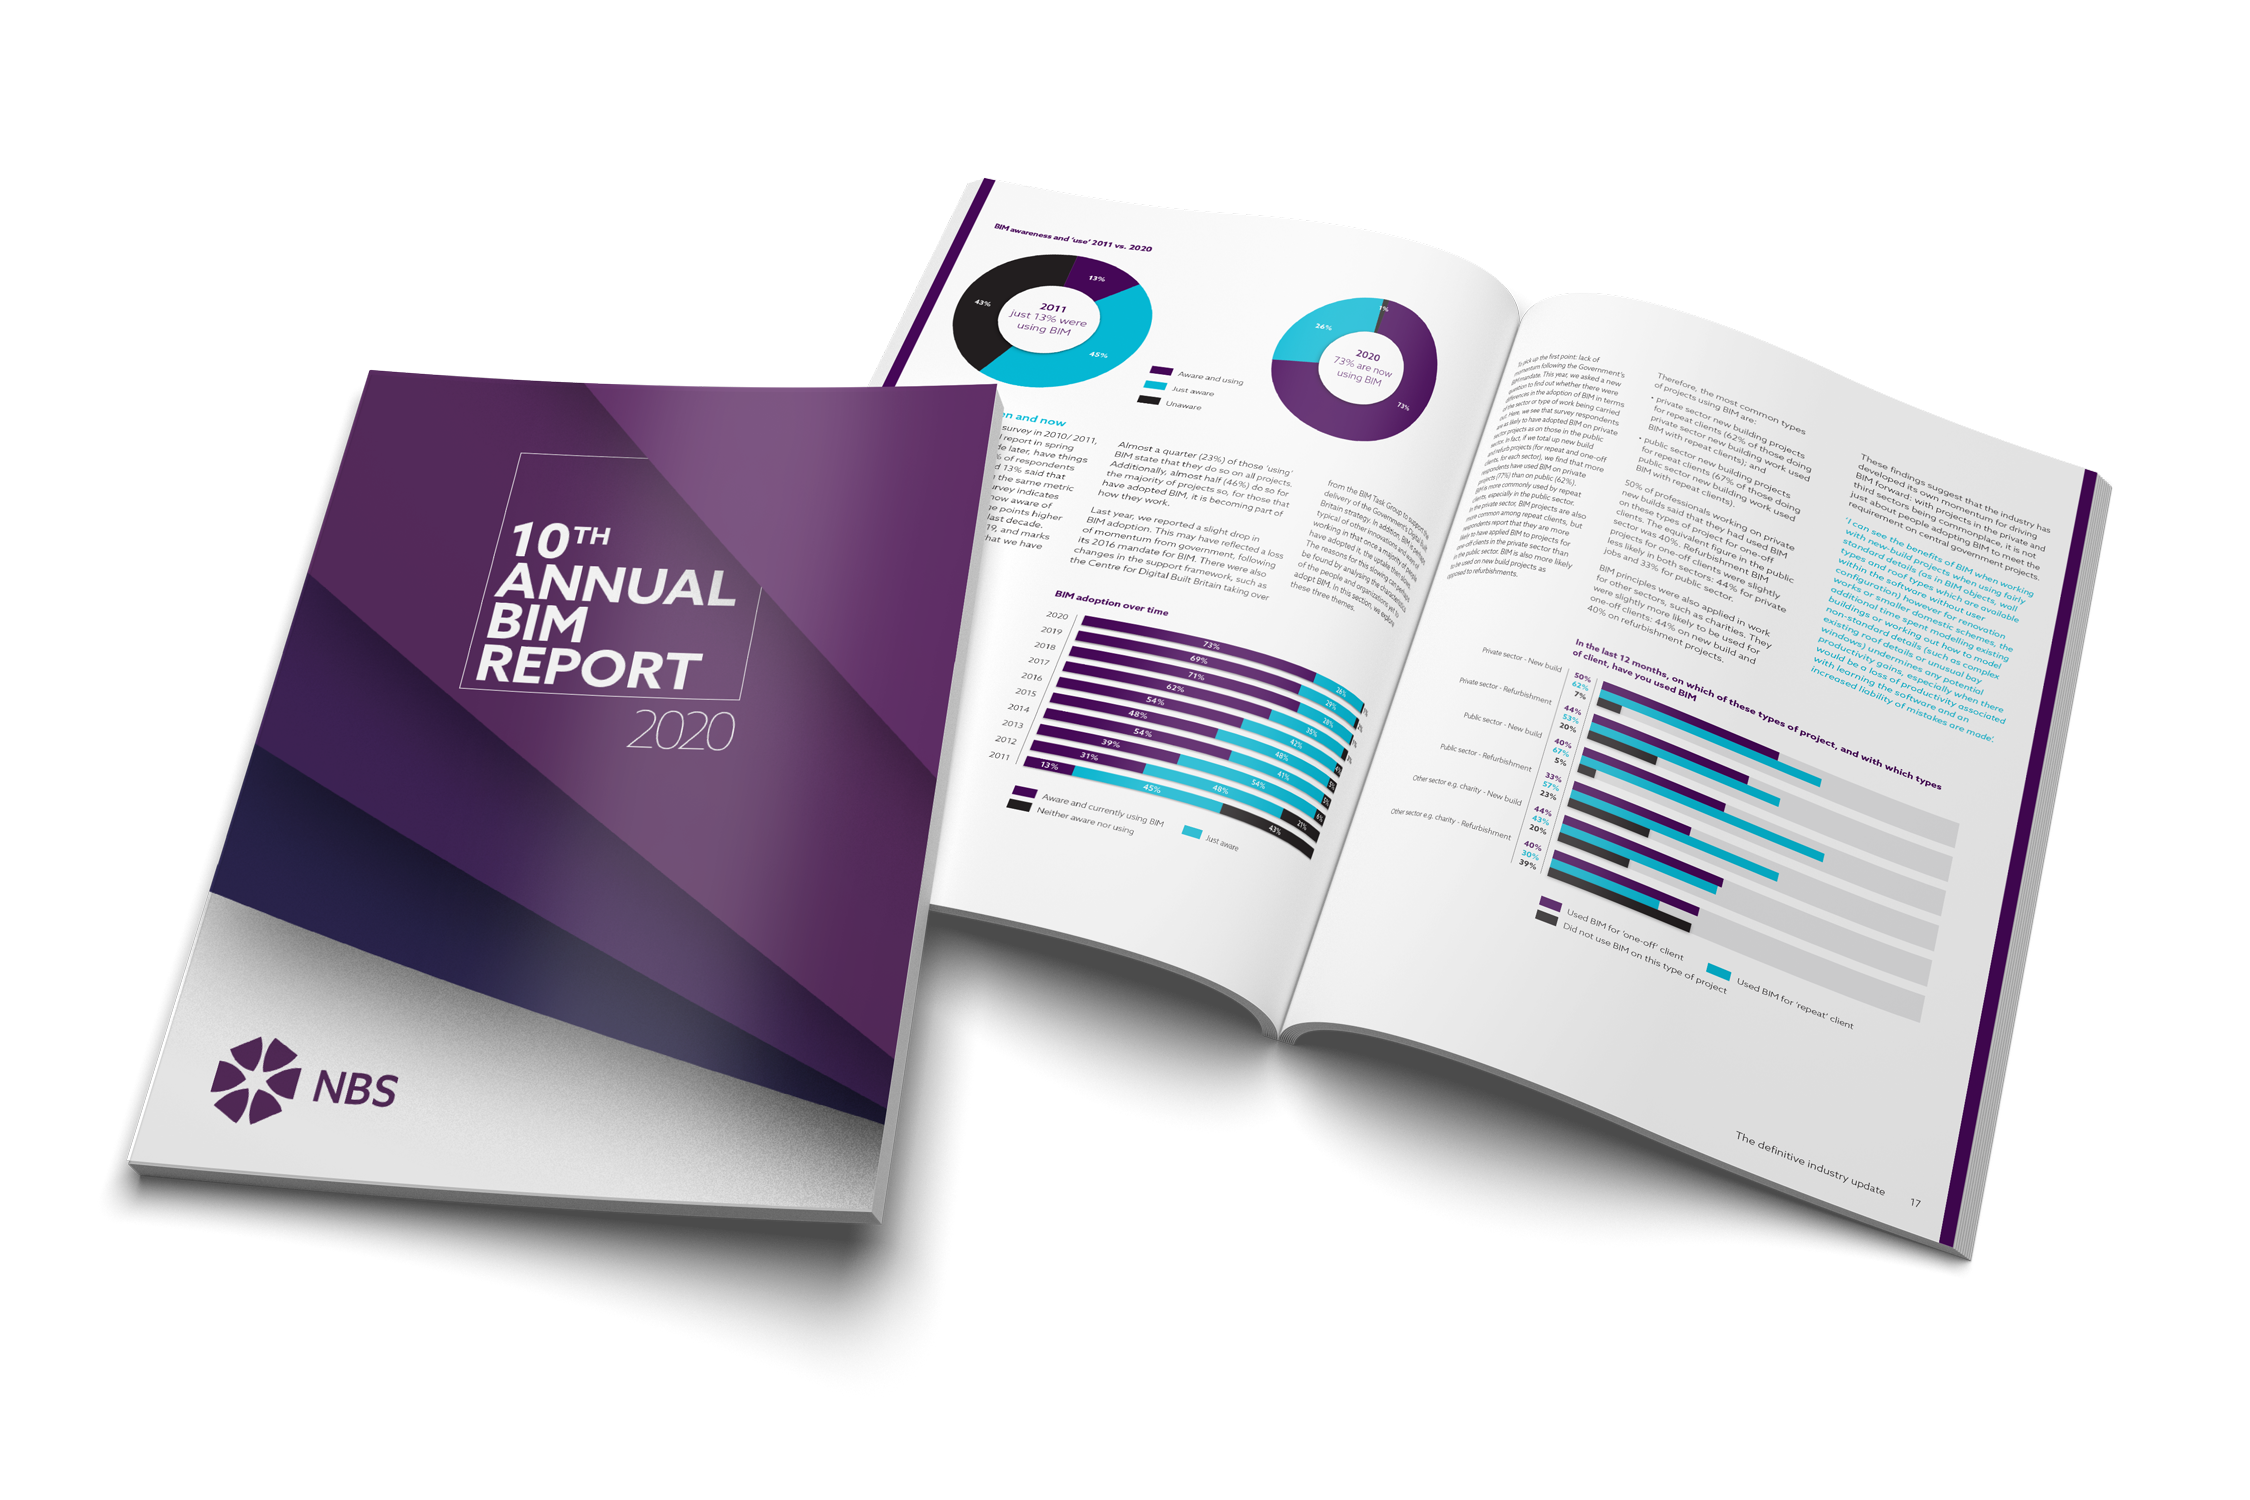 NBS’ 10th National BIM Report